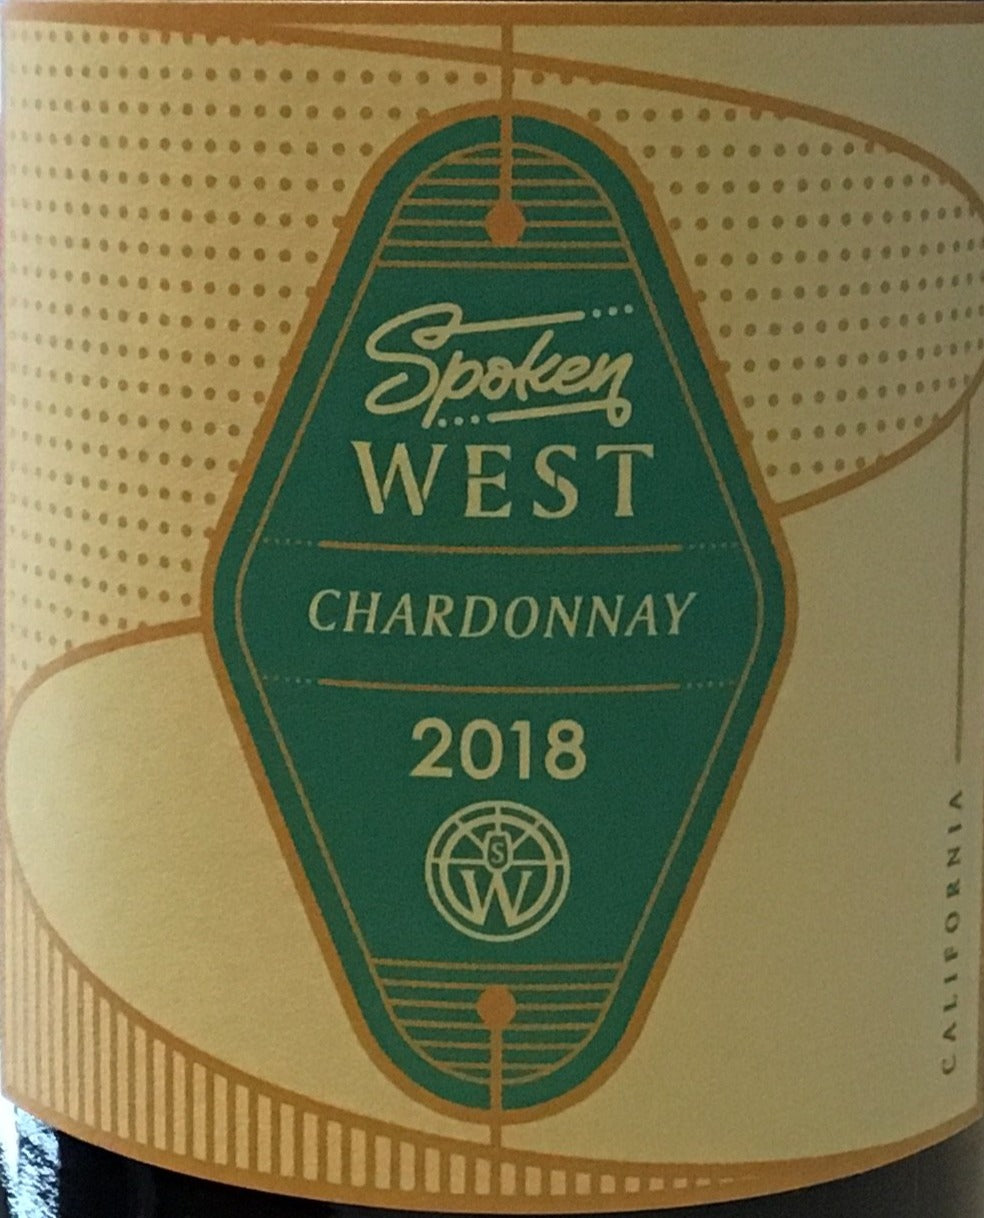 Spoken West - Chardonnay